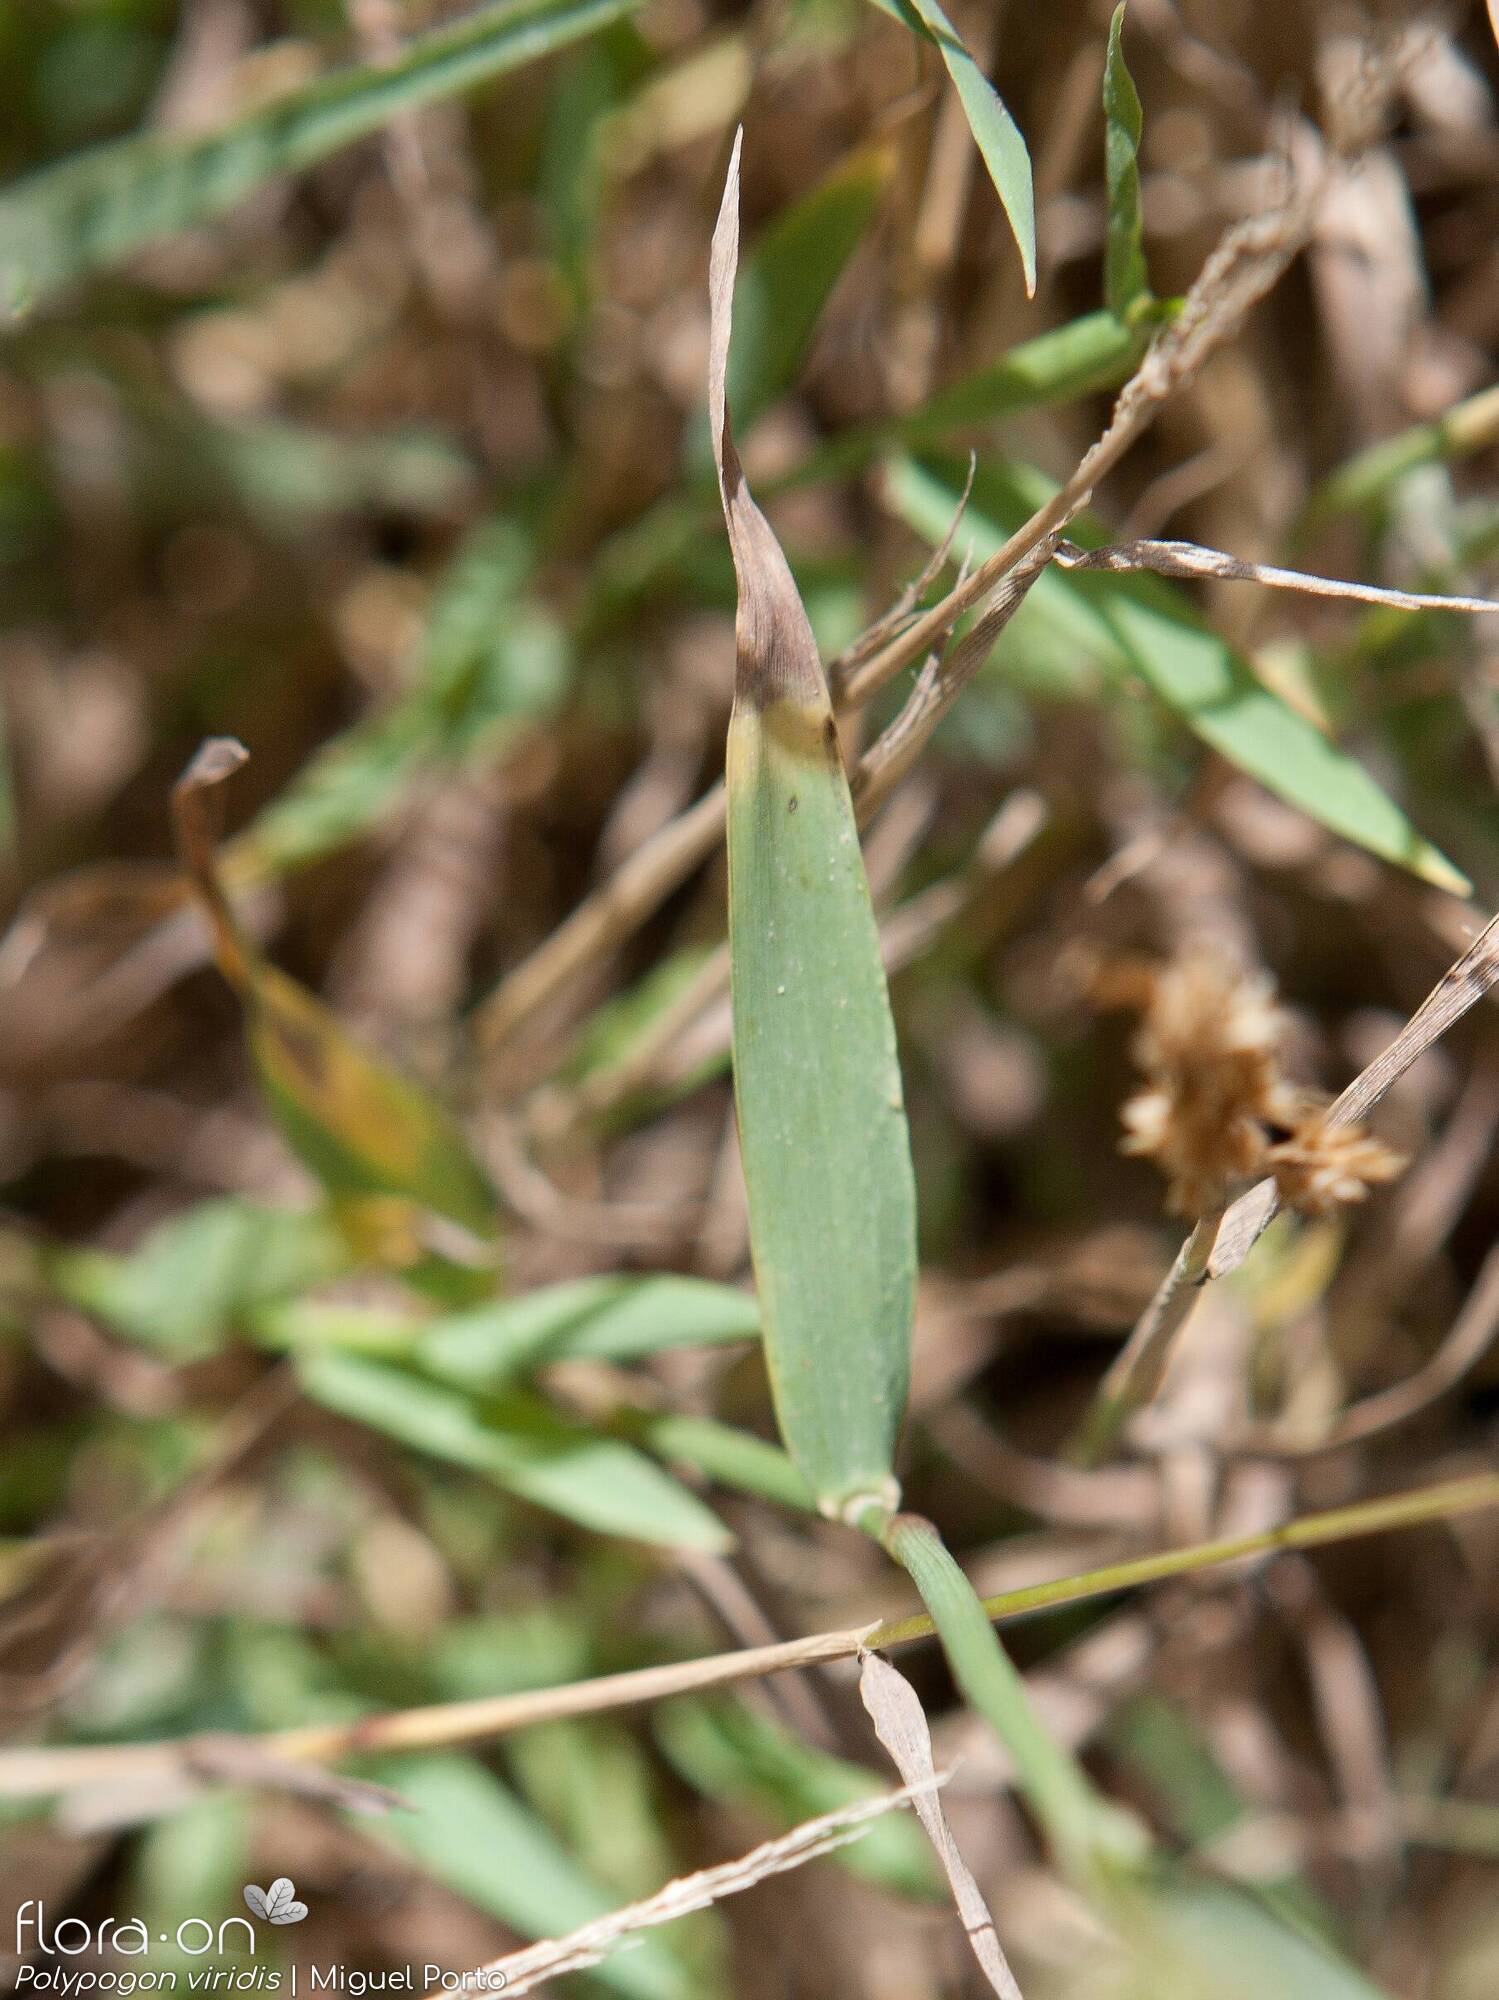 Polypogon viridis - Folha | Miguel Porto; CC BY-NC 4.0